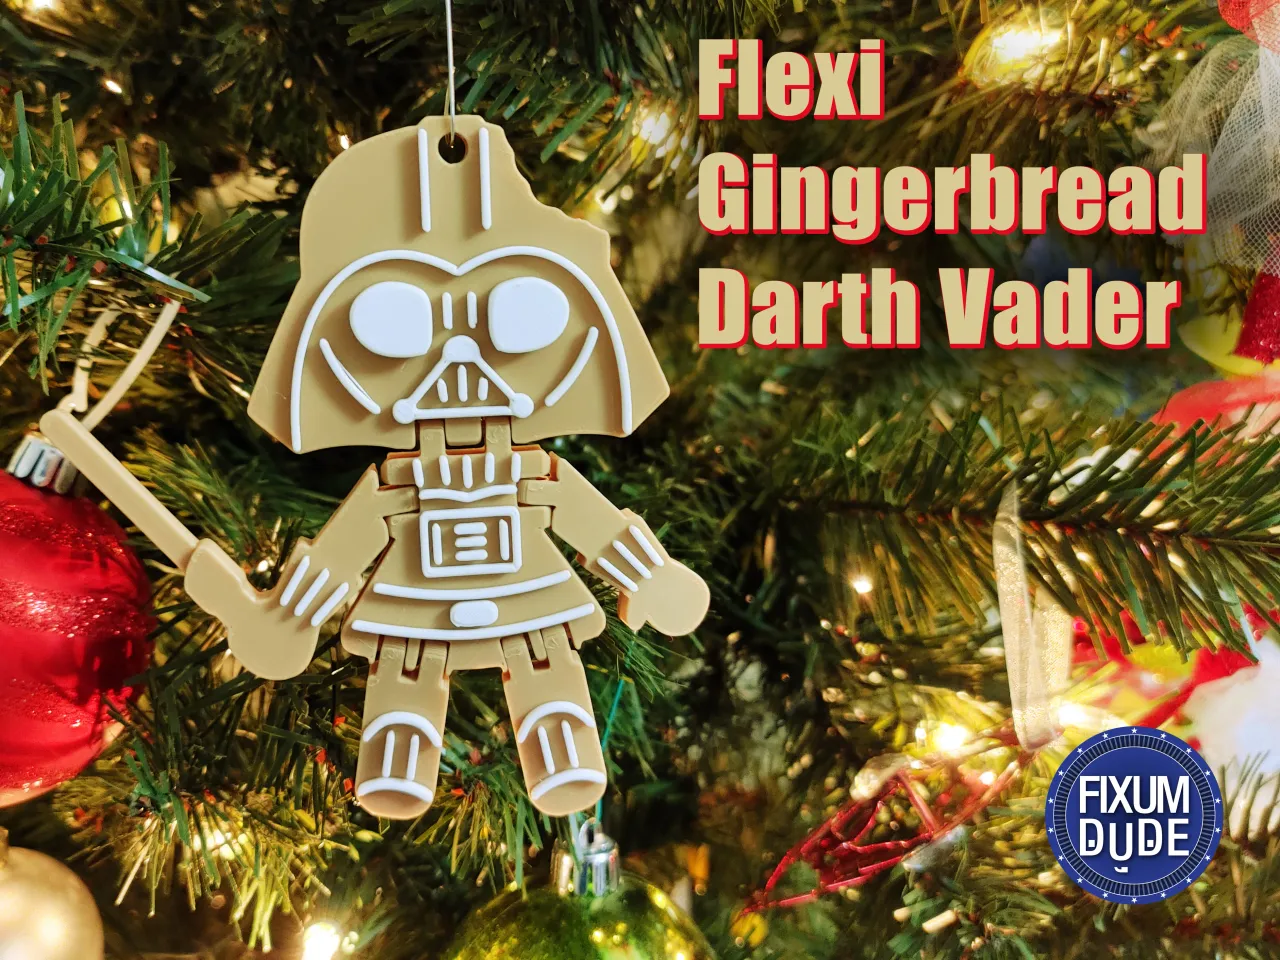 Flexi Gingerbread Darth Vader free Download | fixumdude STL model by